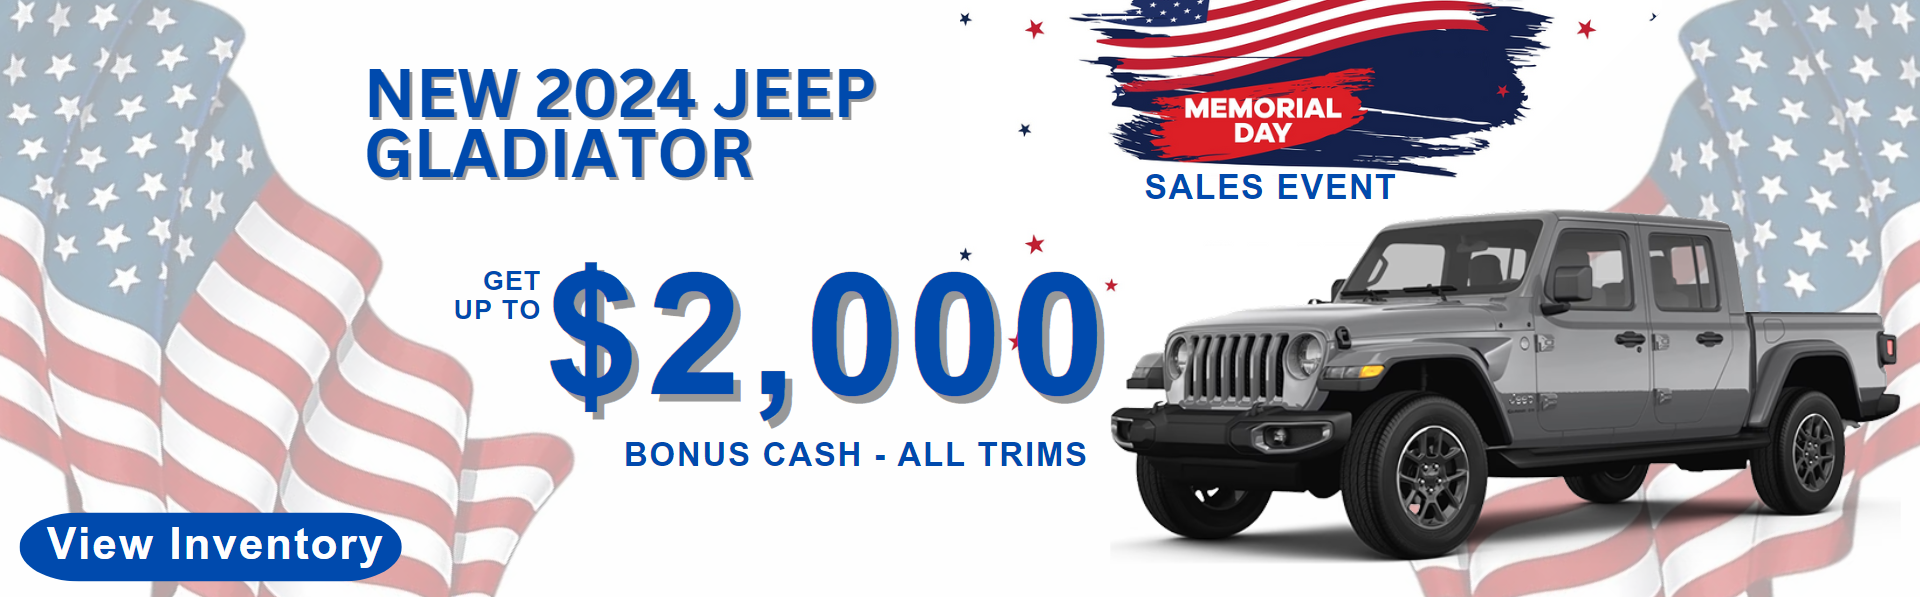 New 2024 Jeep Gladiator Bonus Cash